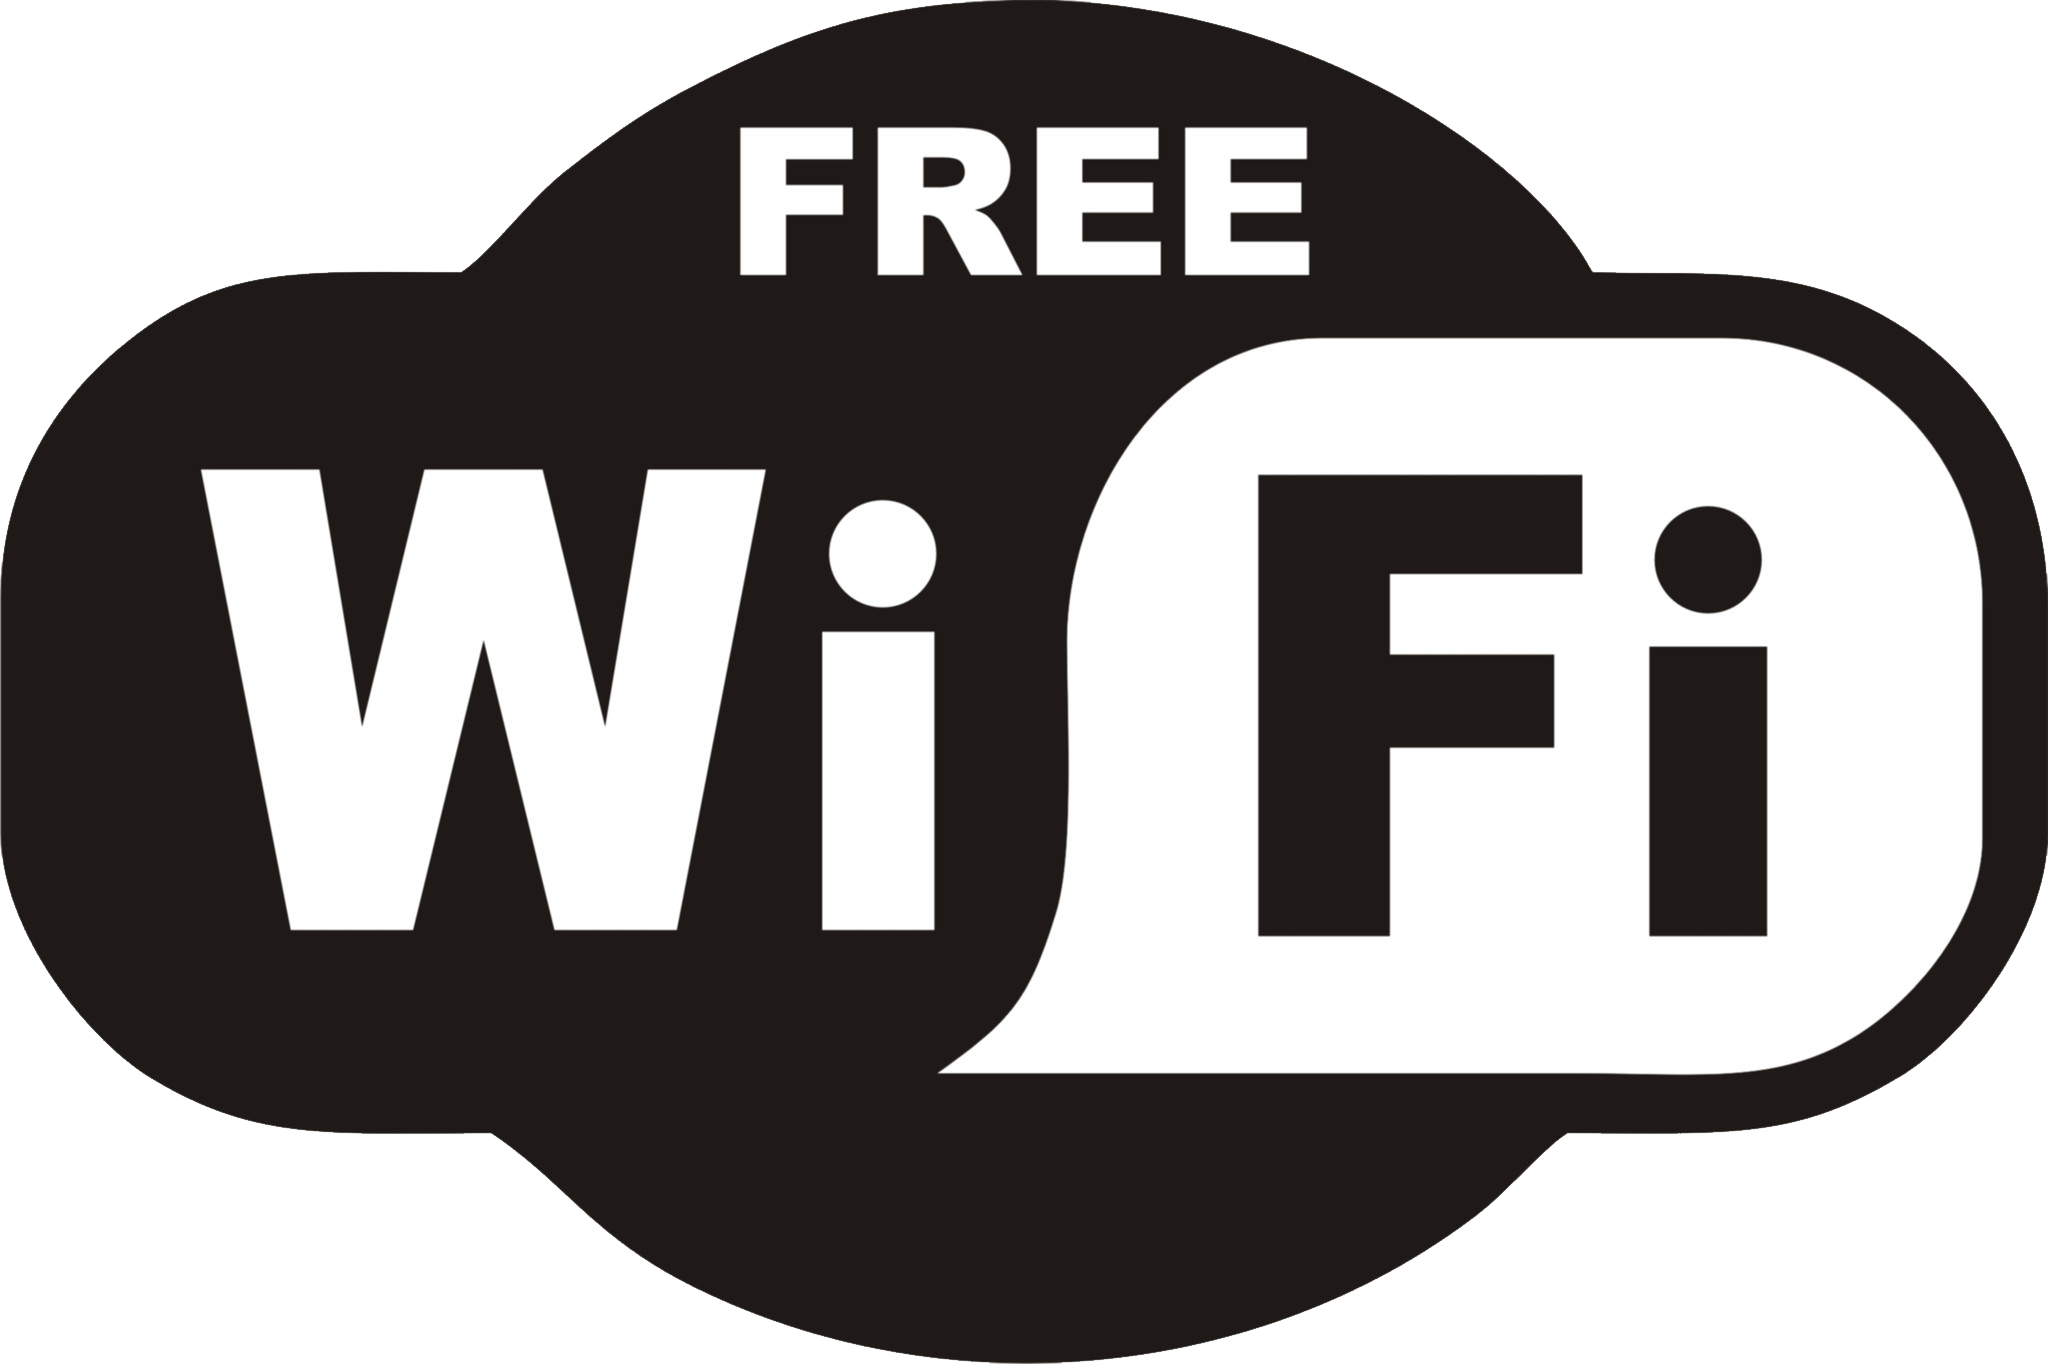 Free WiFi Free PNG HQ Image